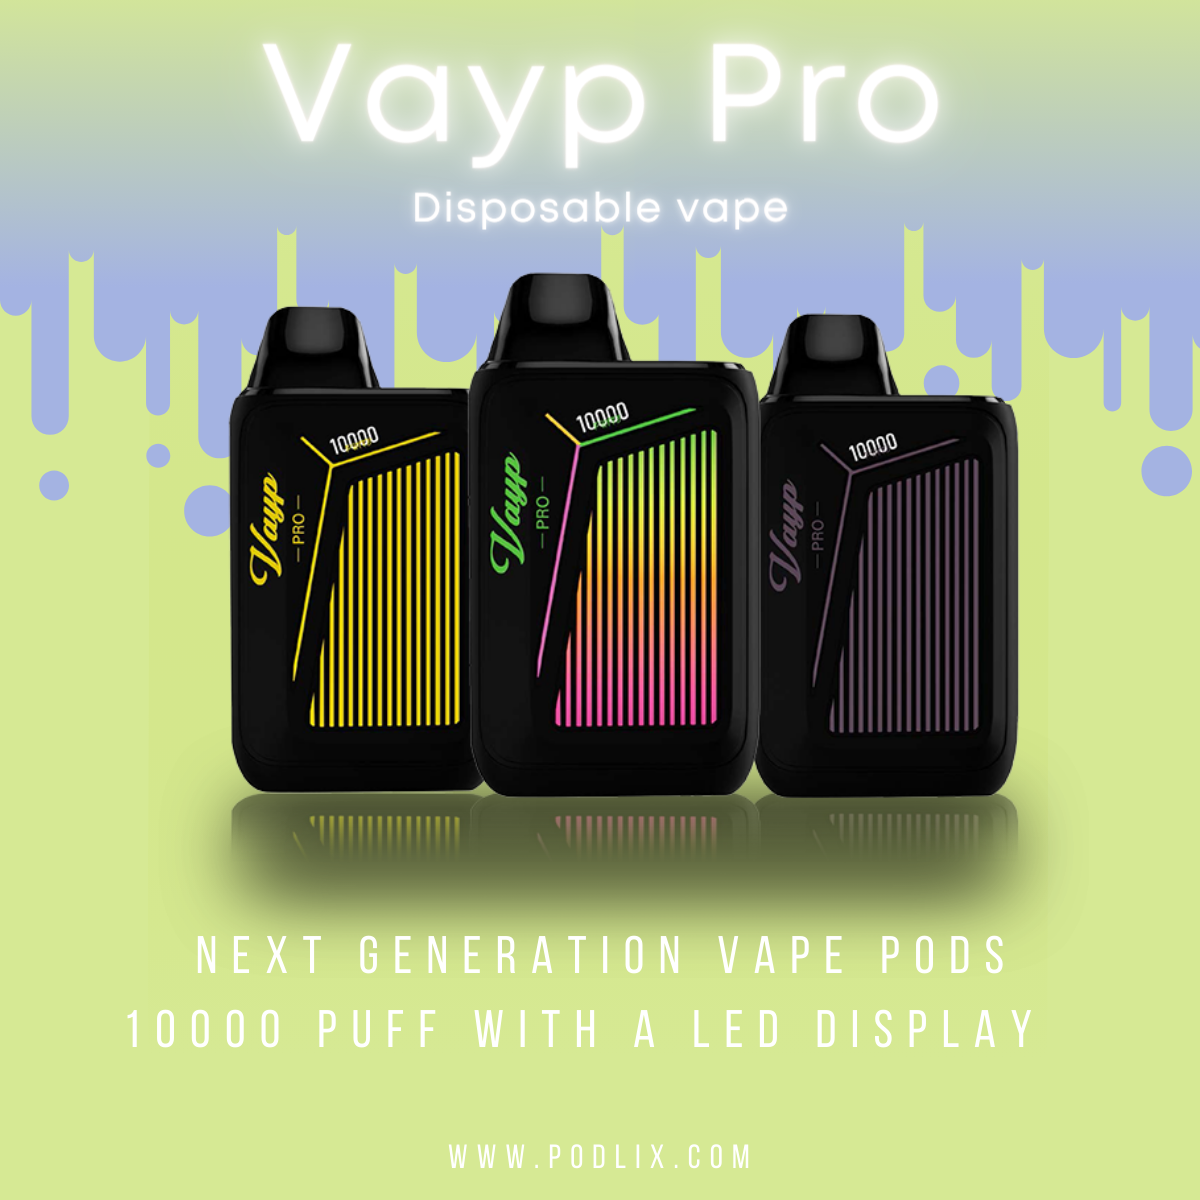 Vayp Pro Disposable Vapes